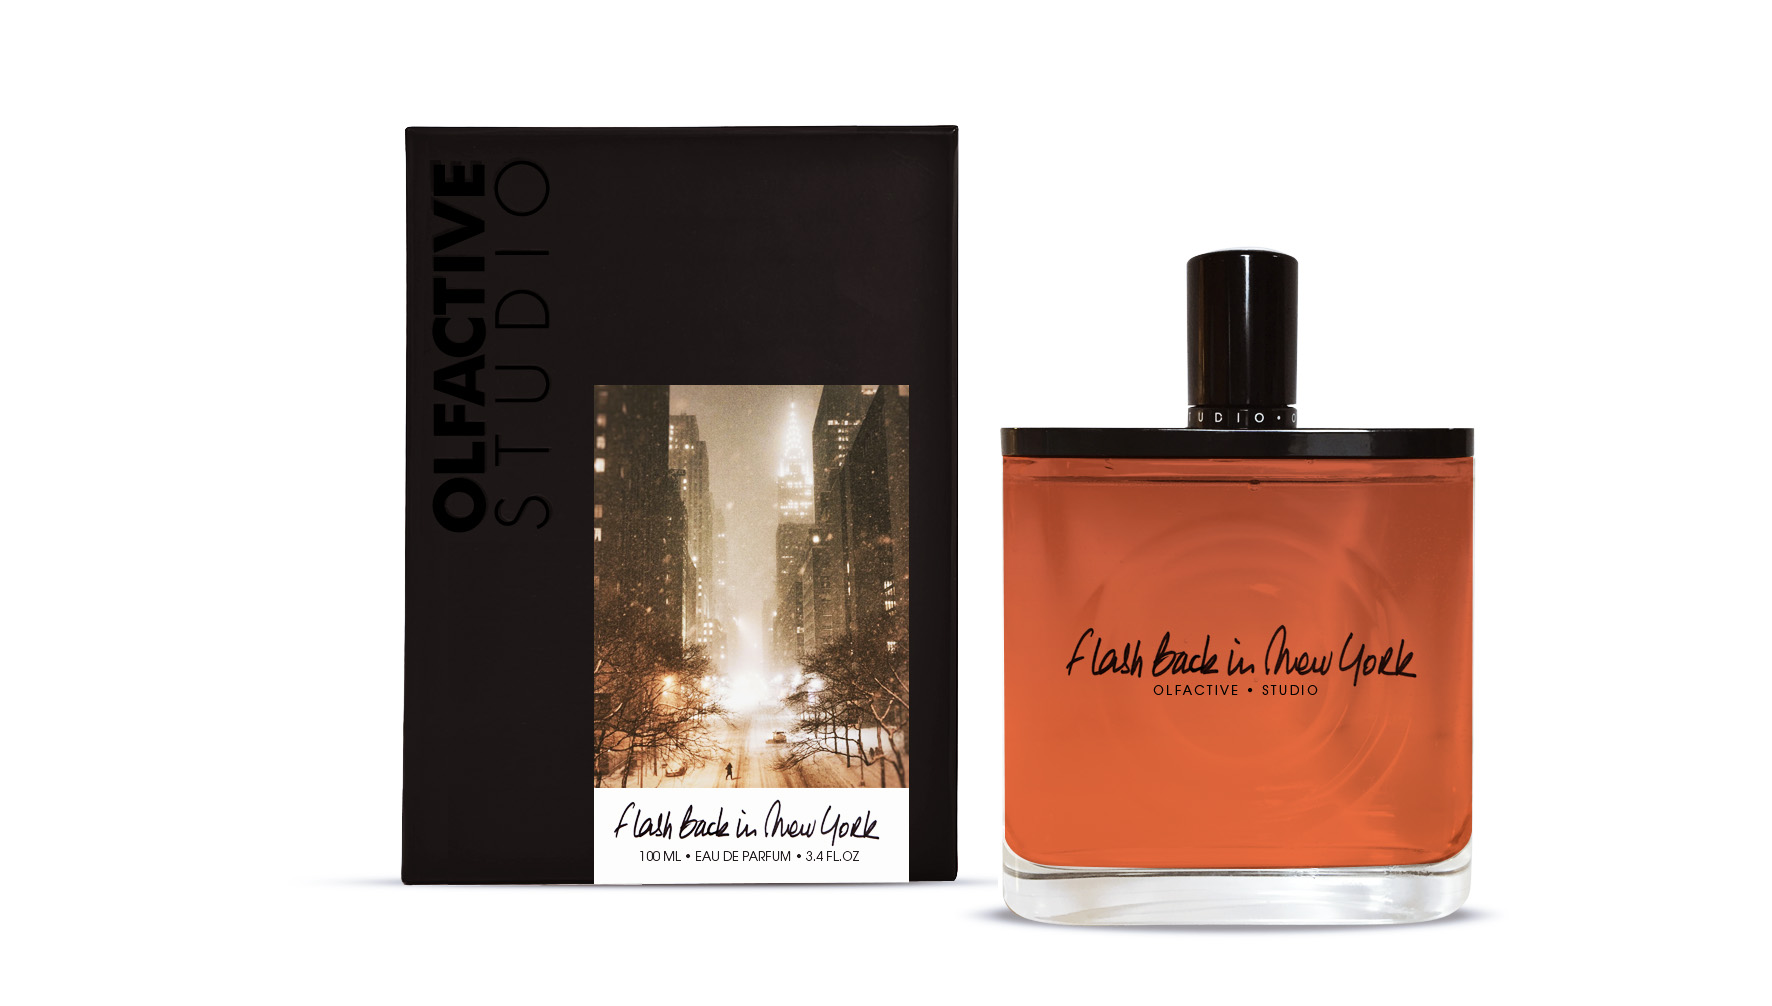 Olfactive Studio FLASH BACK IN NEW YORK Eau de Parfum 100 ml